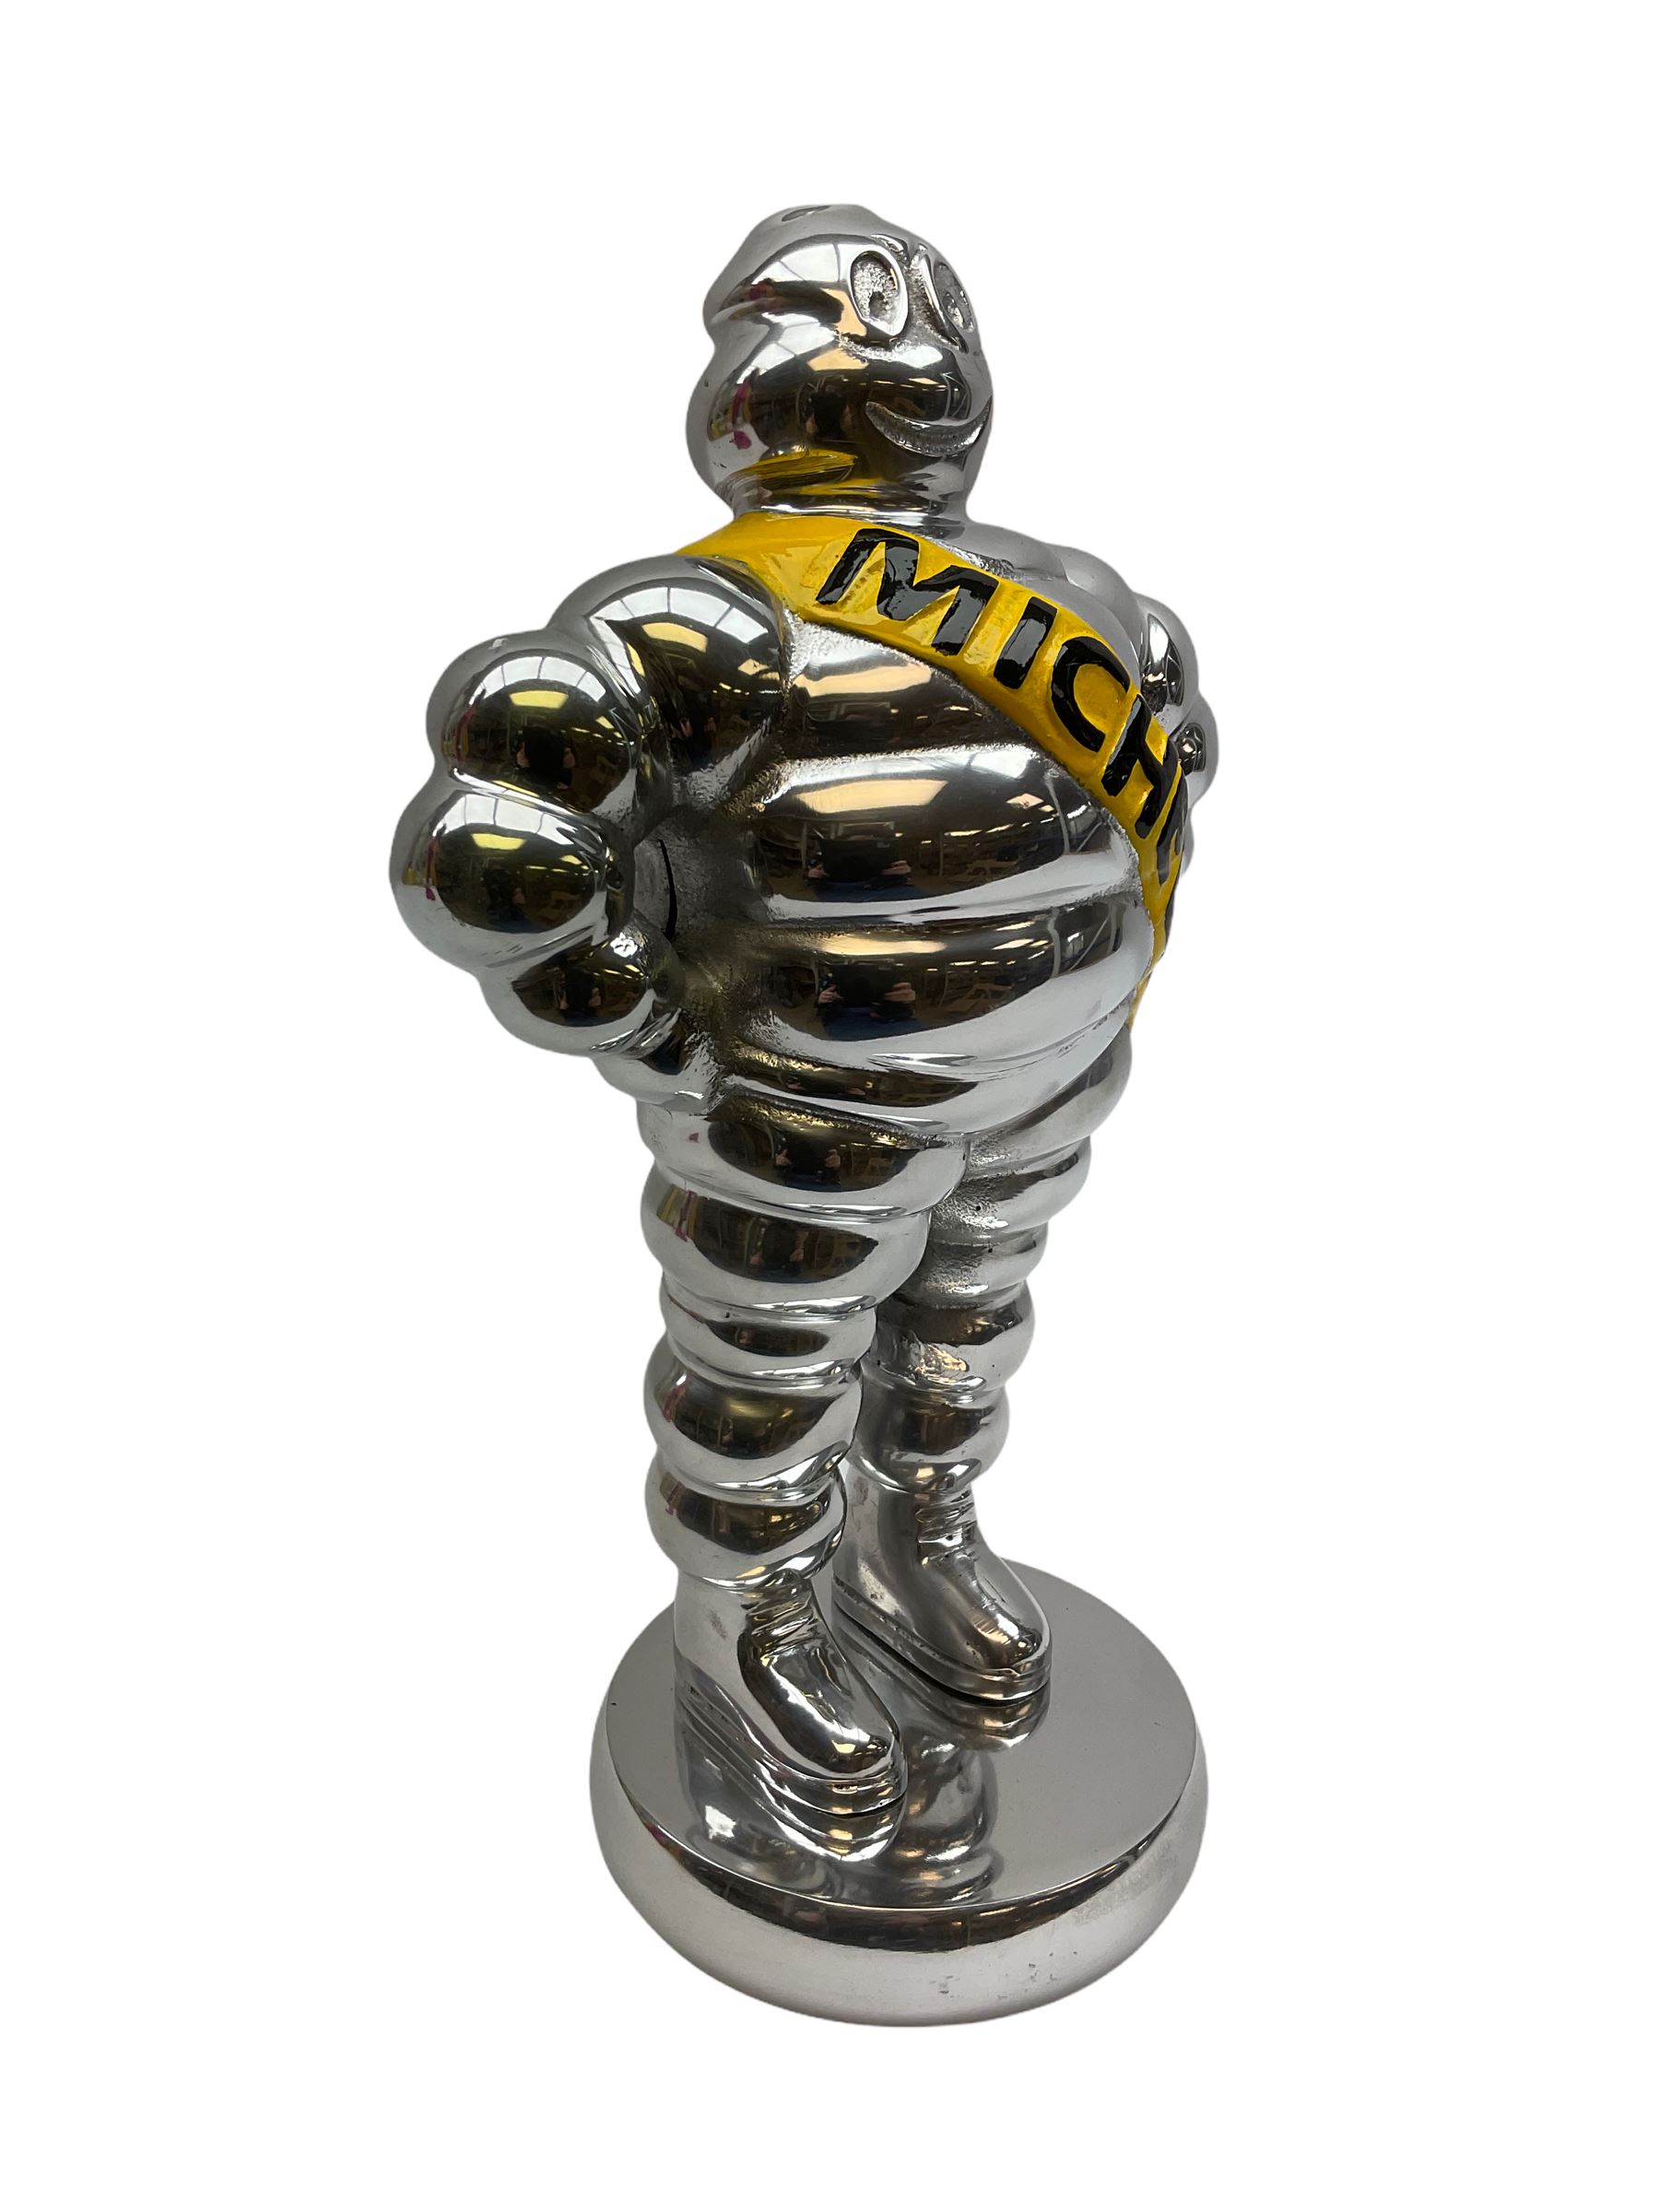 Polished aluminium Michelin man figure - Image 3 of 6